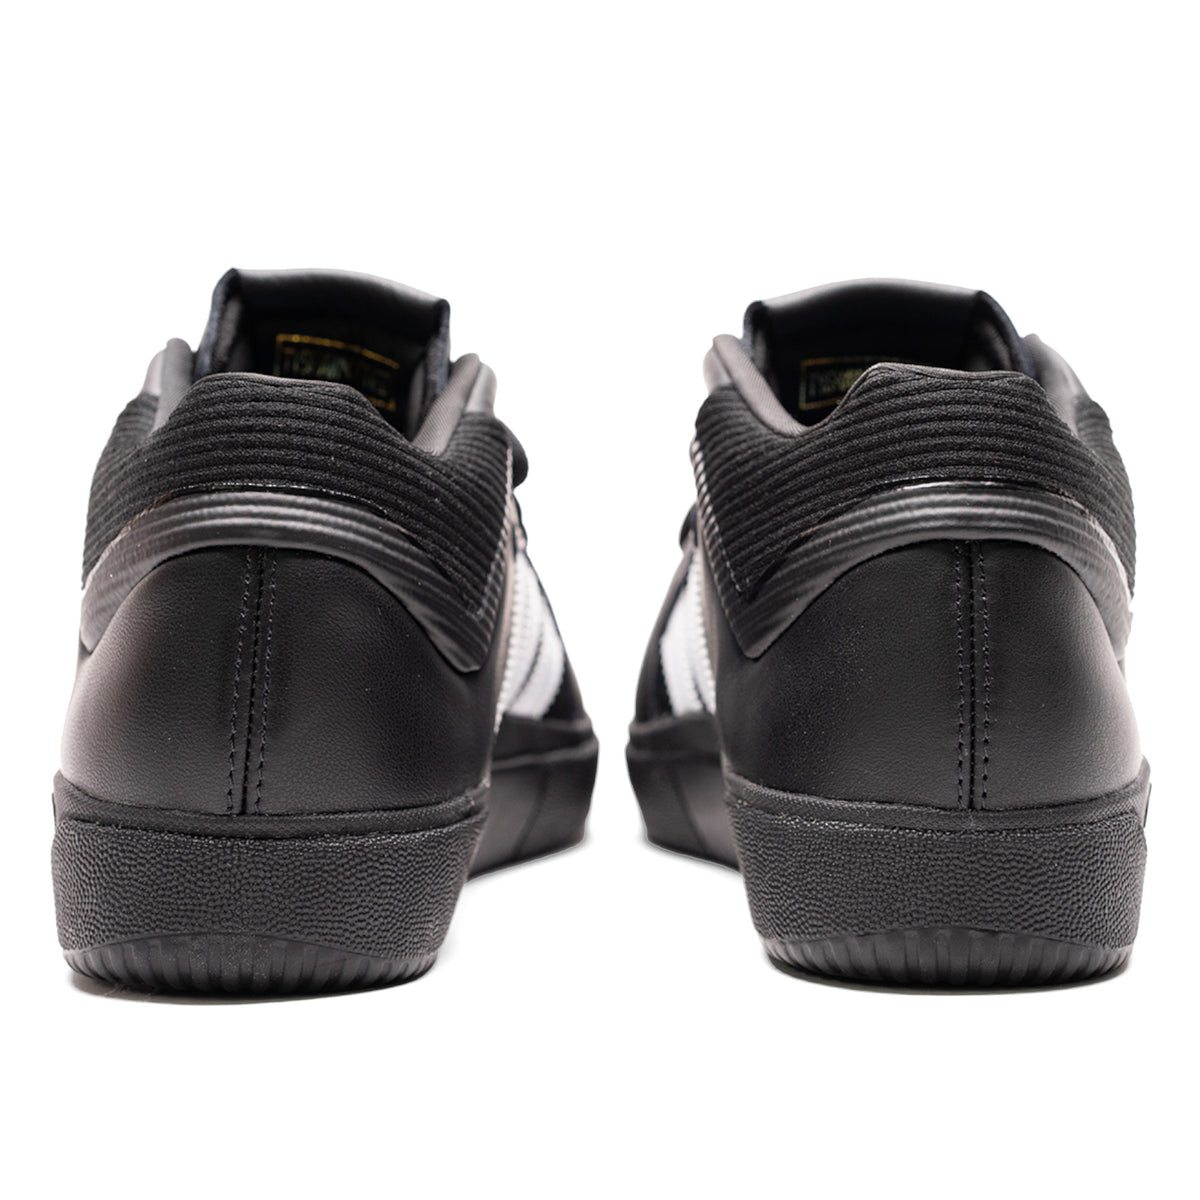 Adidas Tyshawn - CBlack/Ftwwh IG5270 black and white